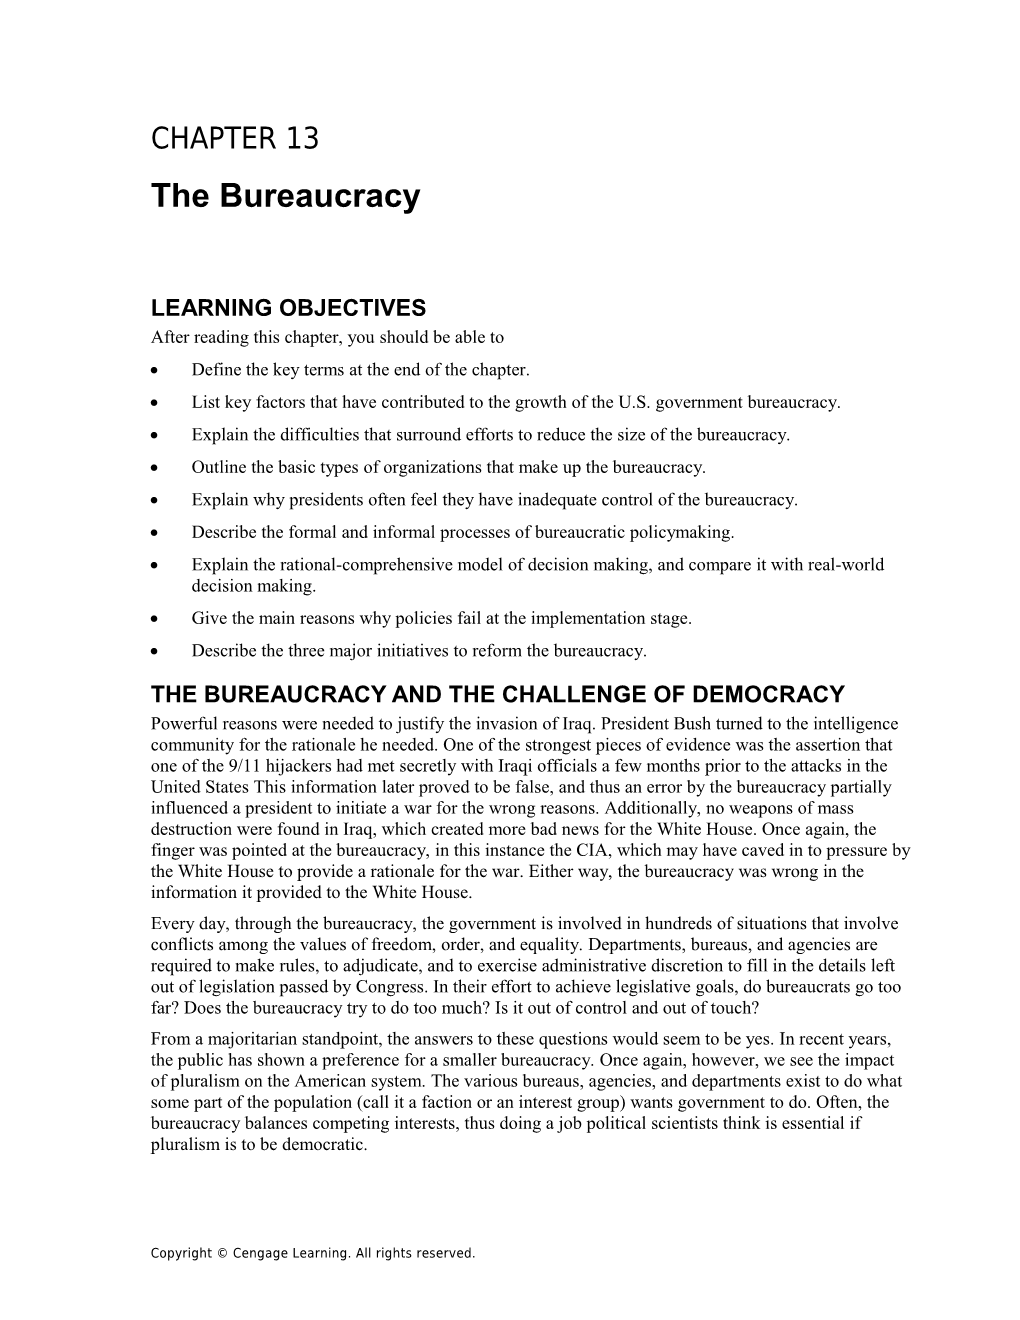 Chapter 13: the Bureaucracy 1